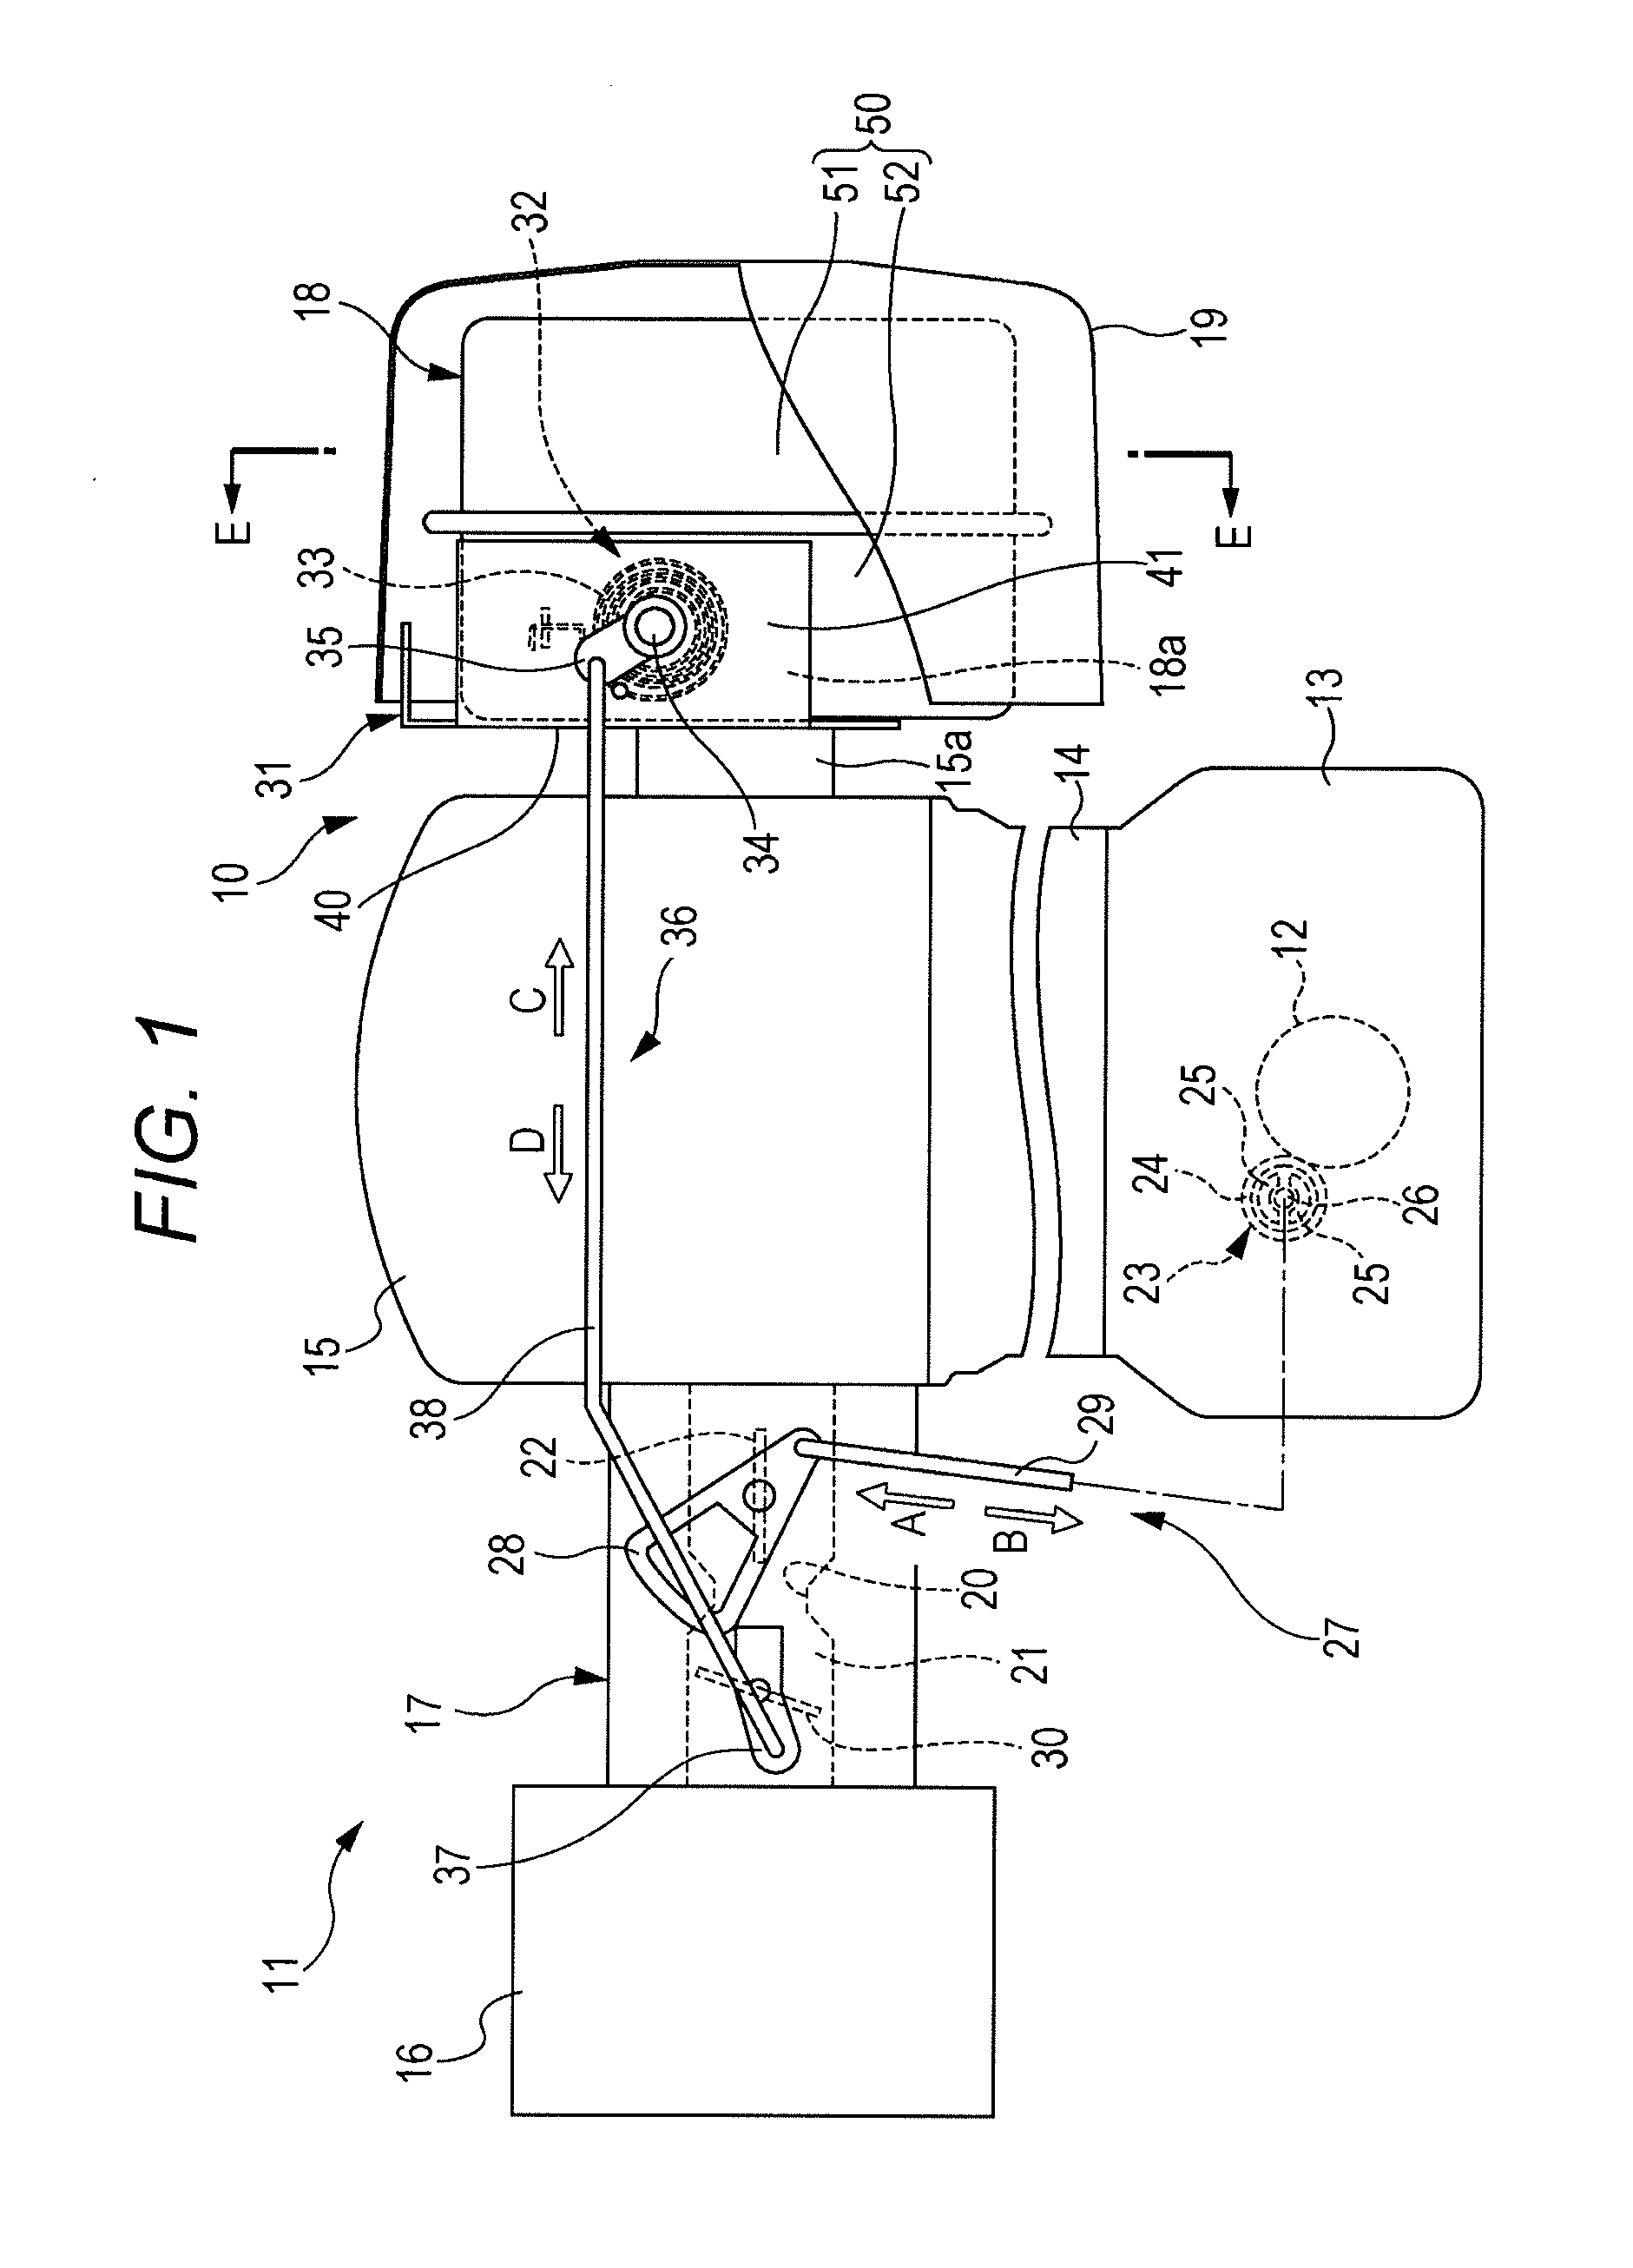 Automatic choke apparatus for engine